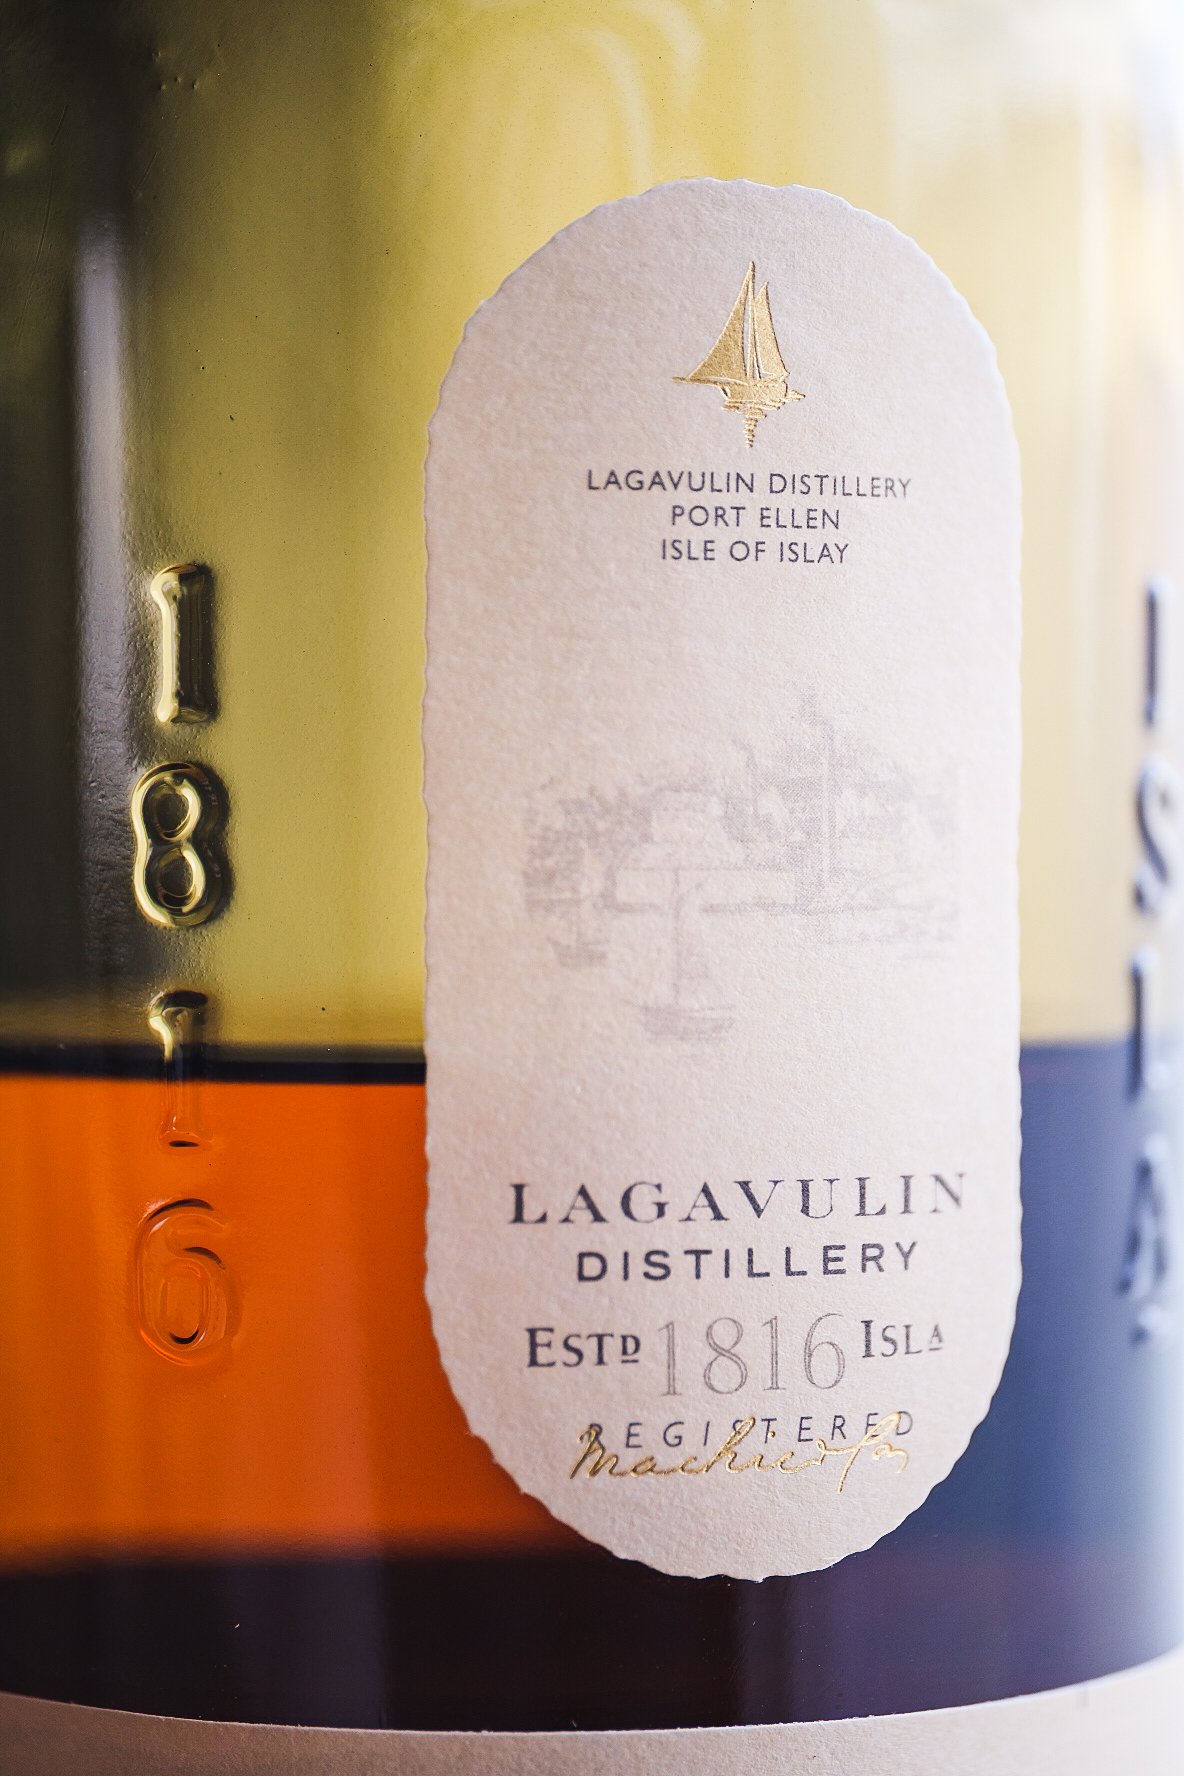 Lagavulin 16 Ratings and Tasting Notes - The Seattle Spirits Society